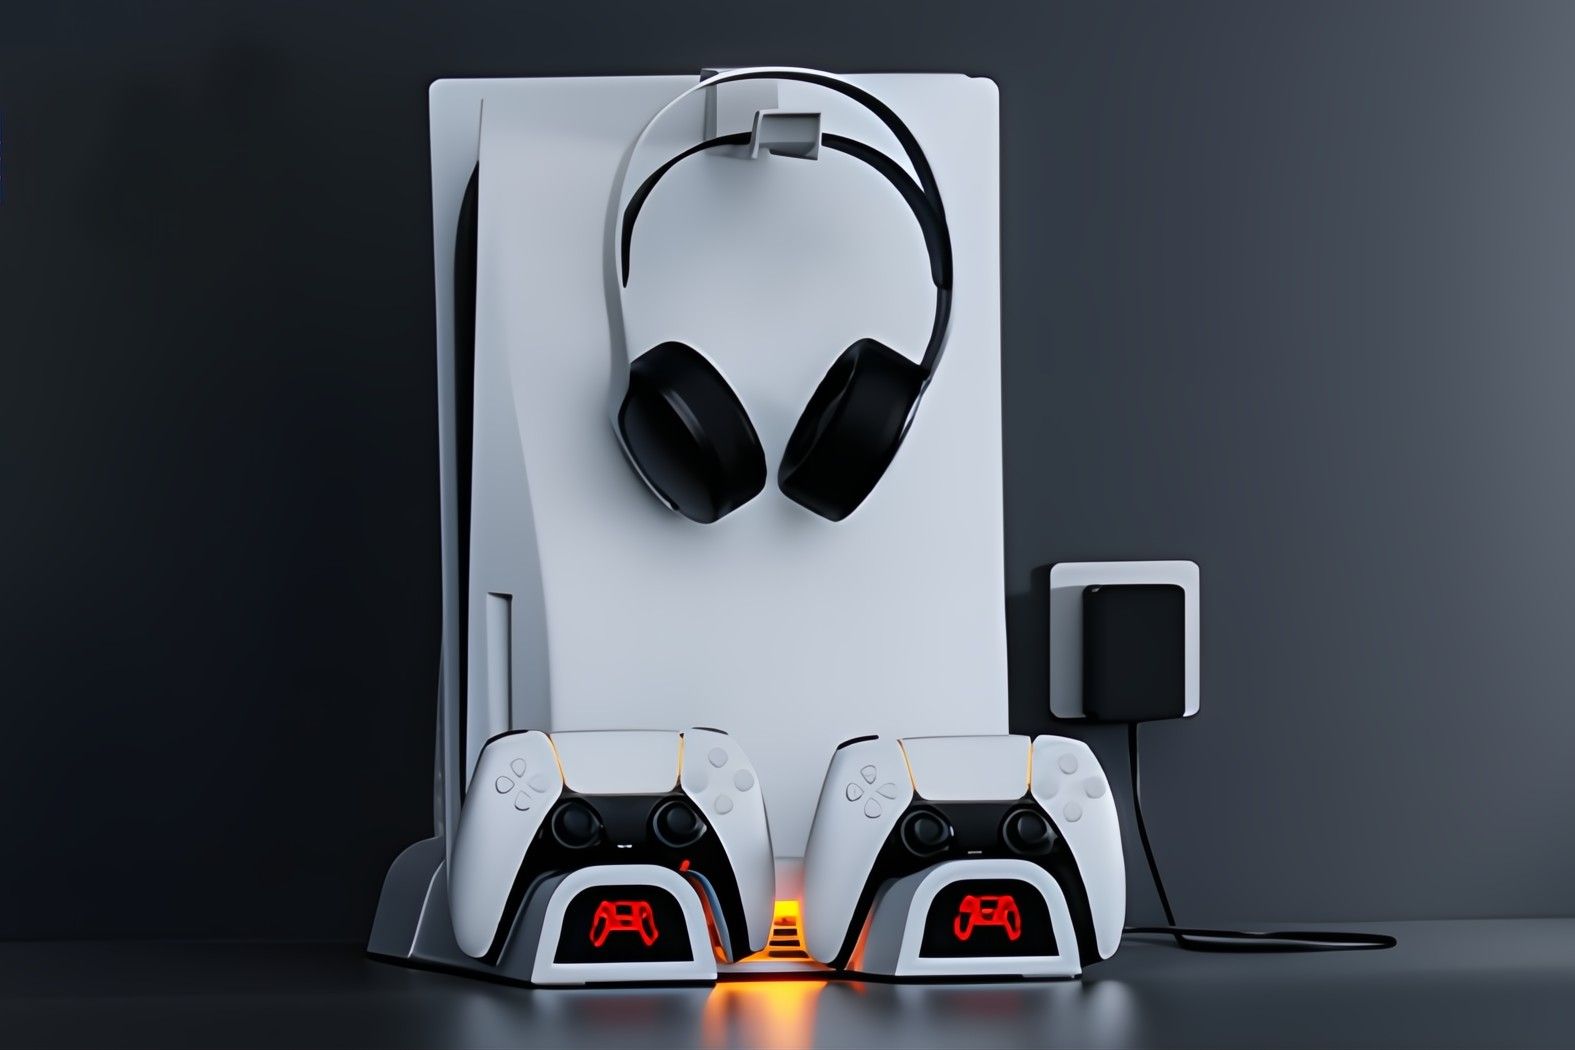 The NexiGo PS5 Cooling Stand on a desk